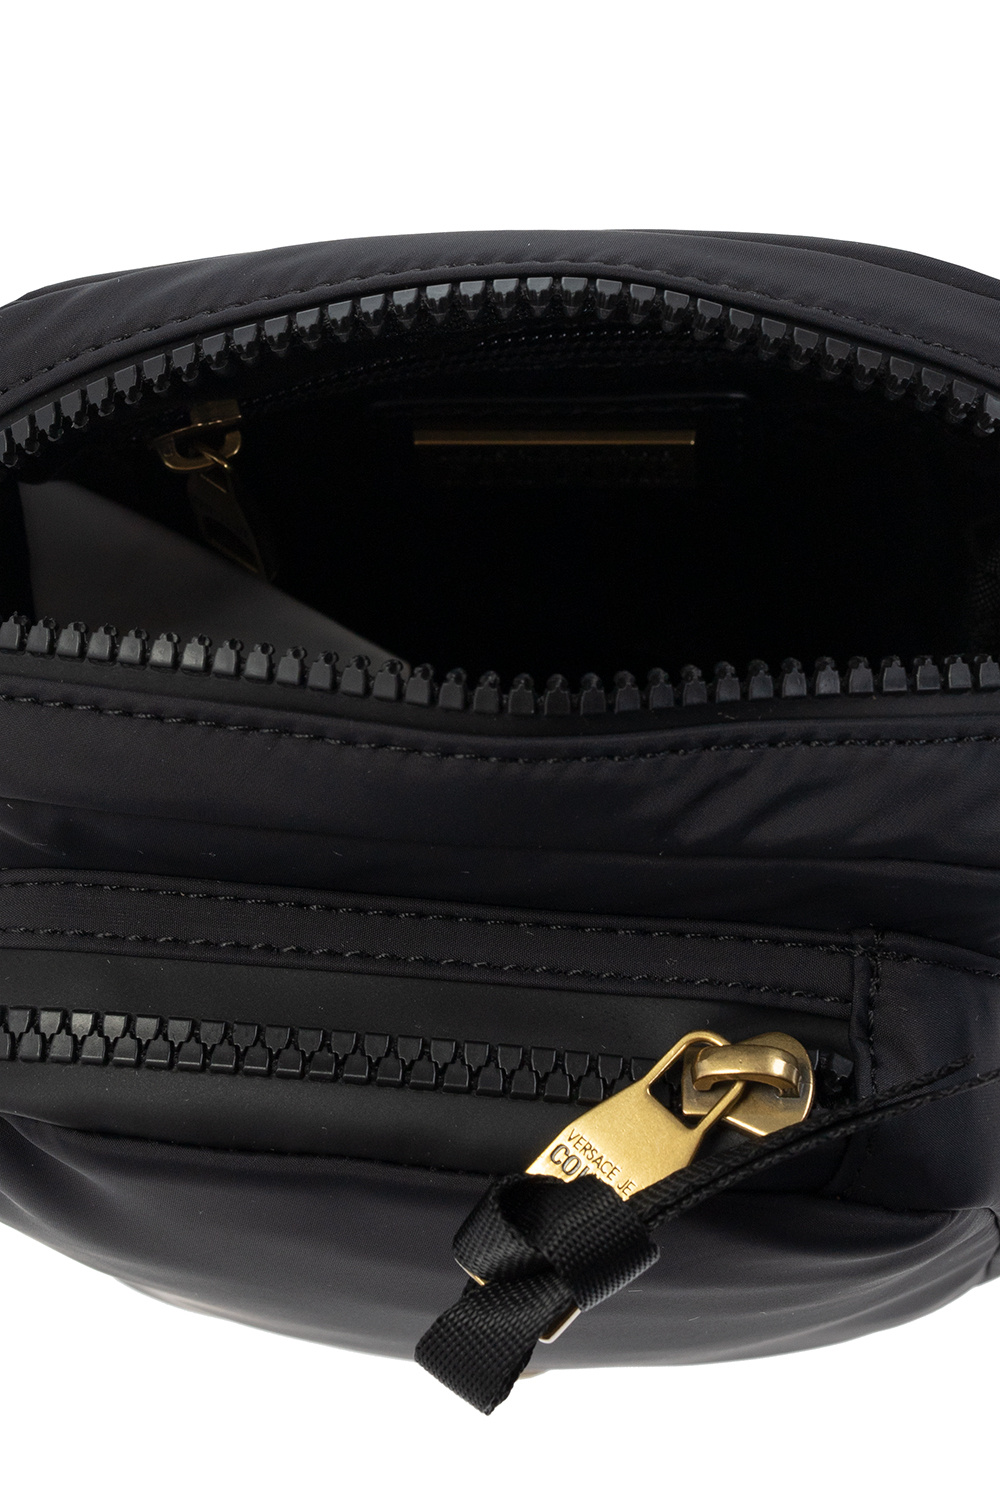 Nudie Jeans Roger slub t-shirt in black ‘Couture 01’ shoulder bag